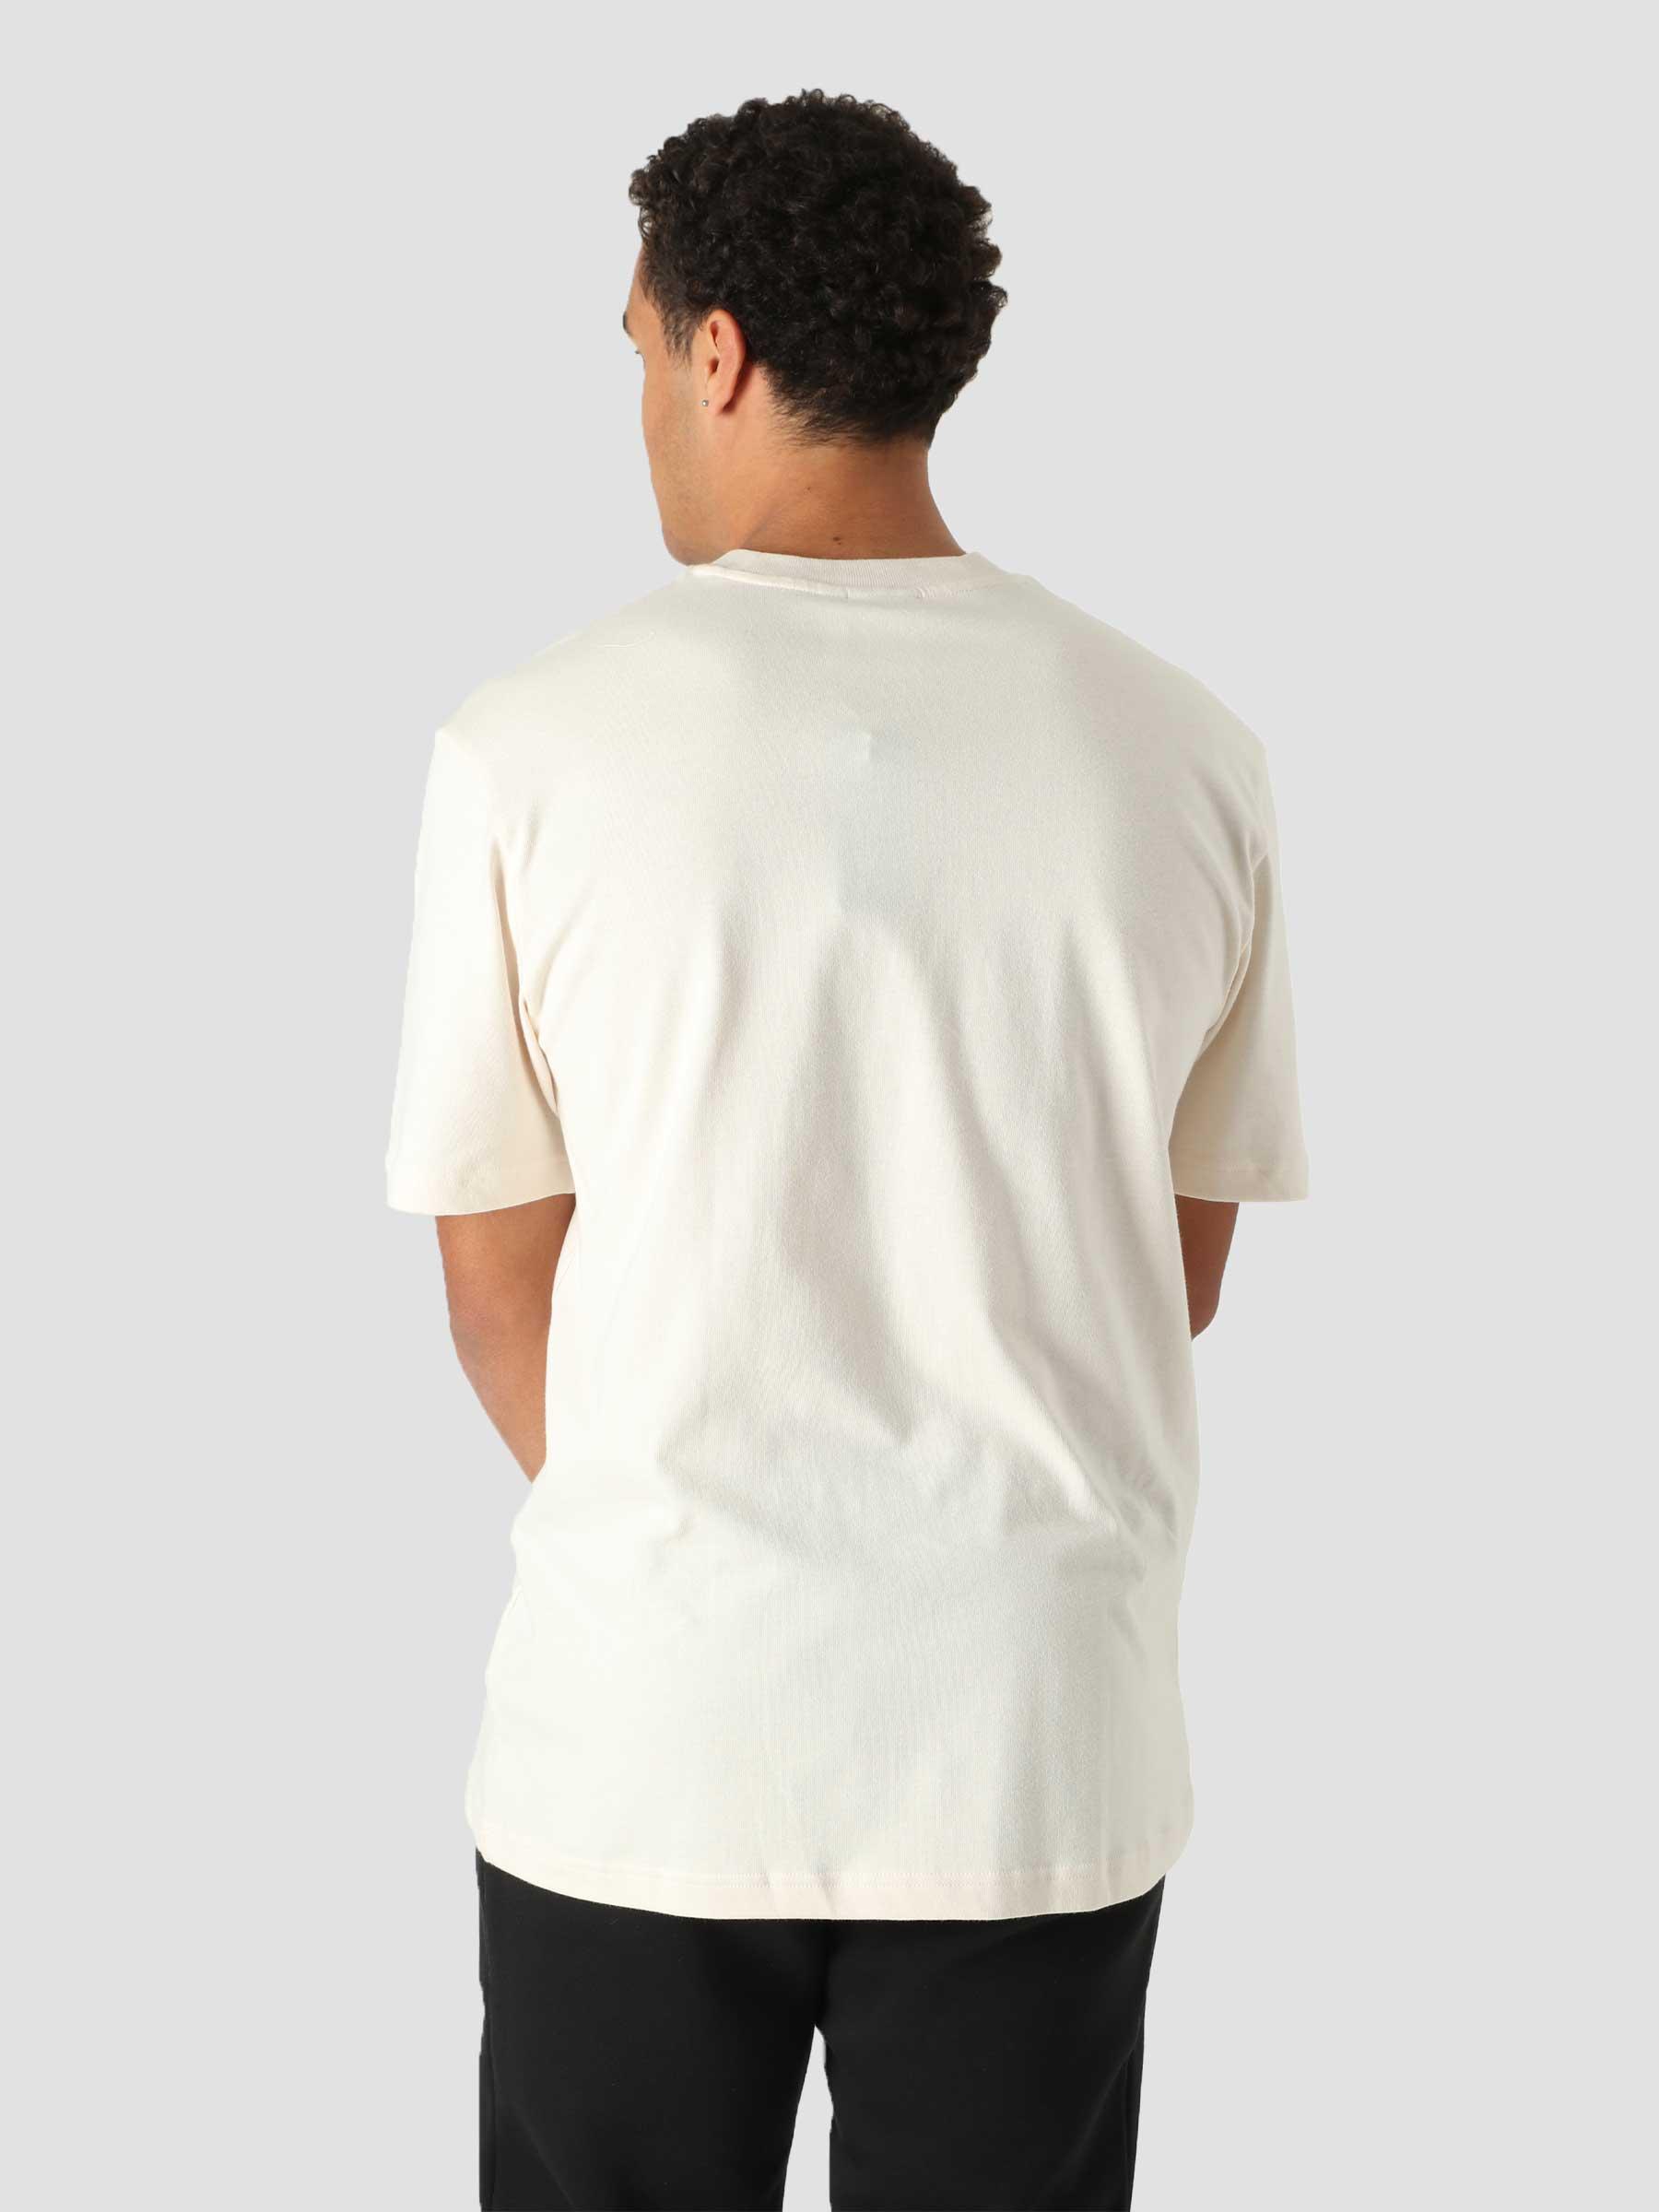 Trf A33 G T-Shirt Wonder White HI5261